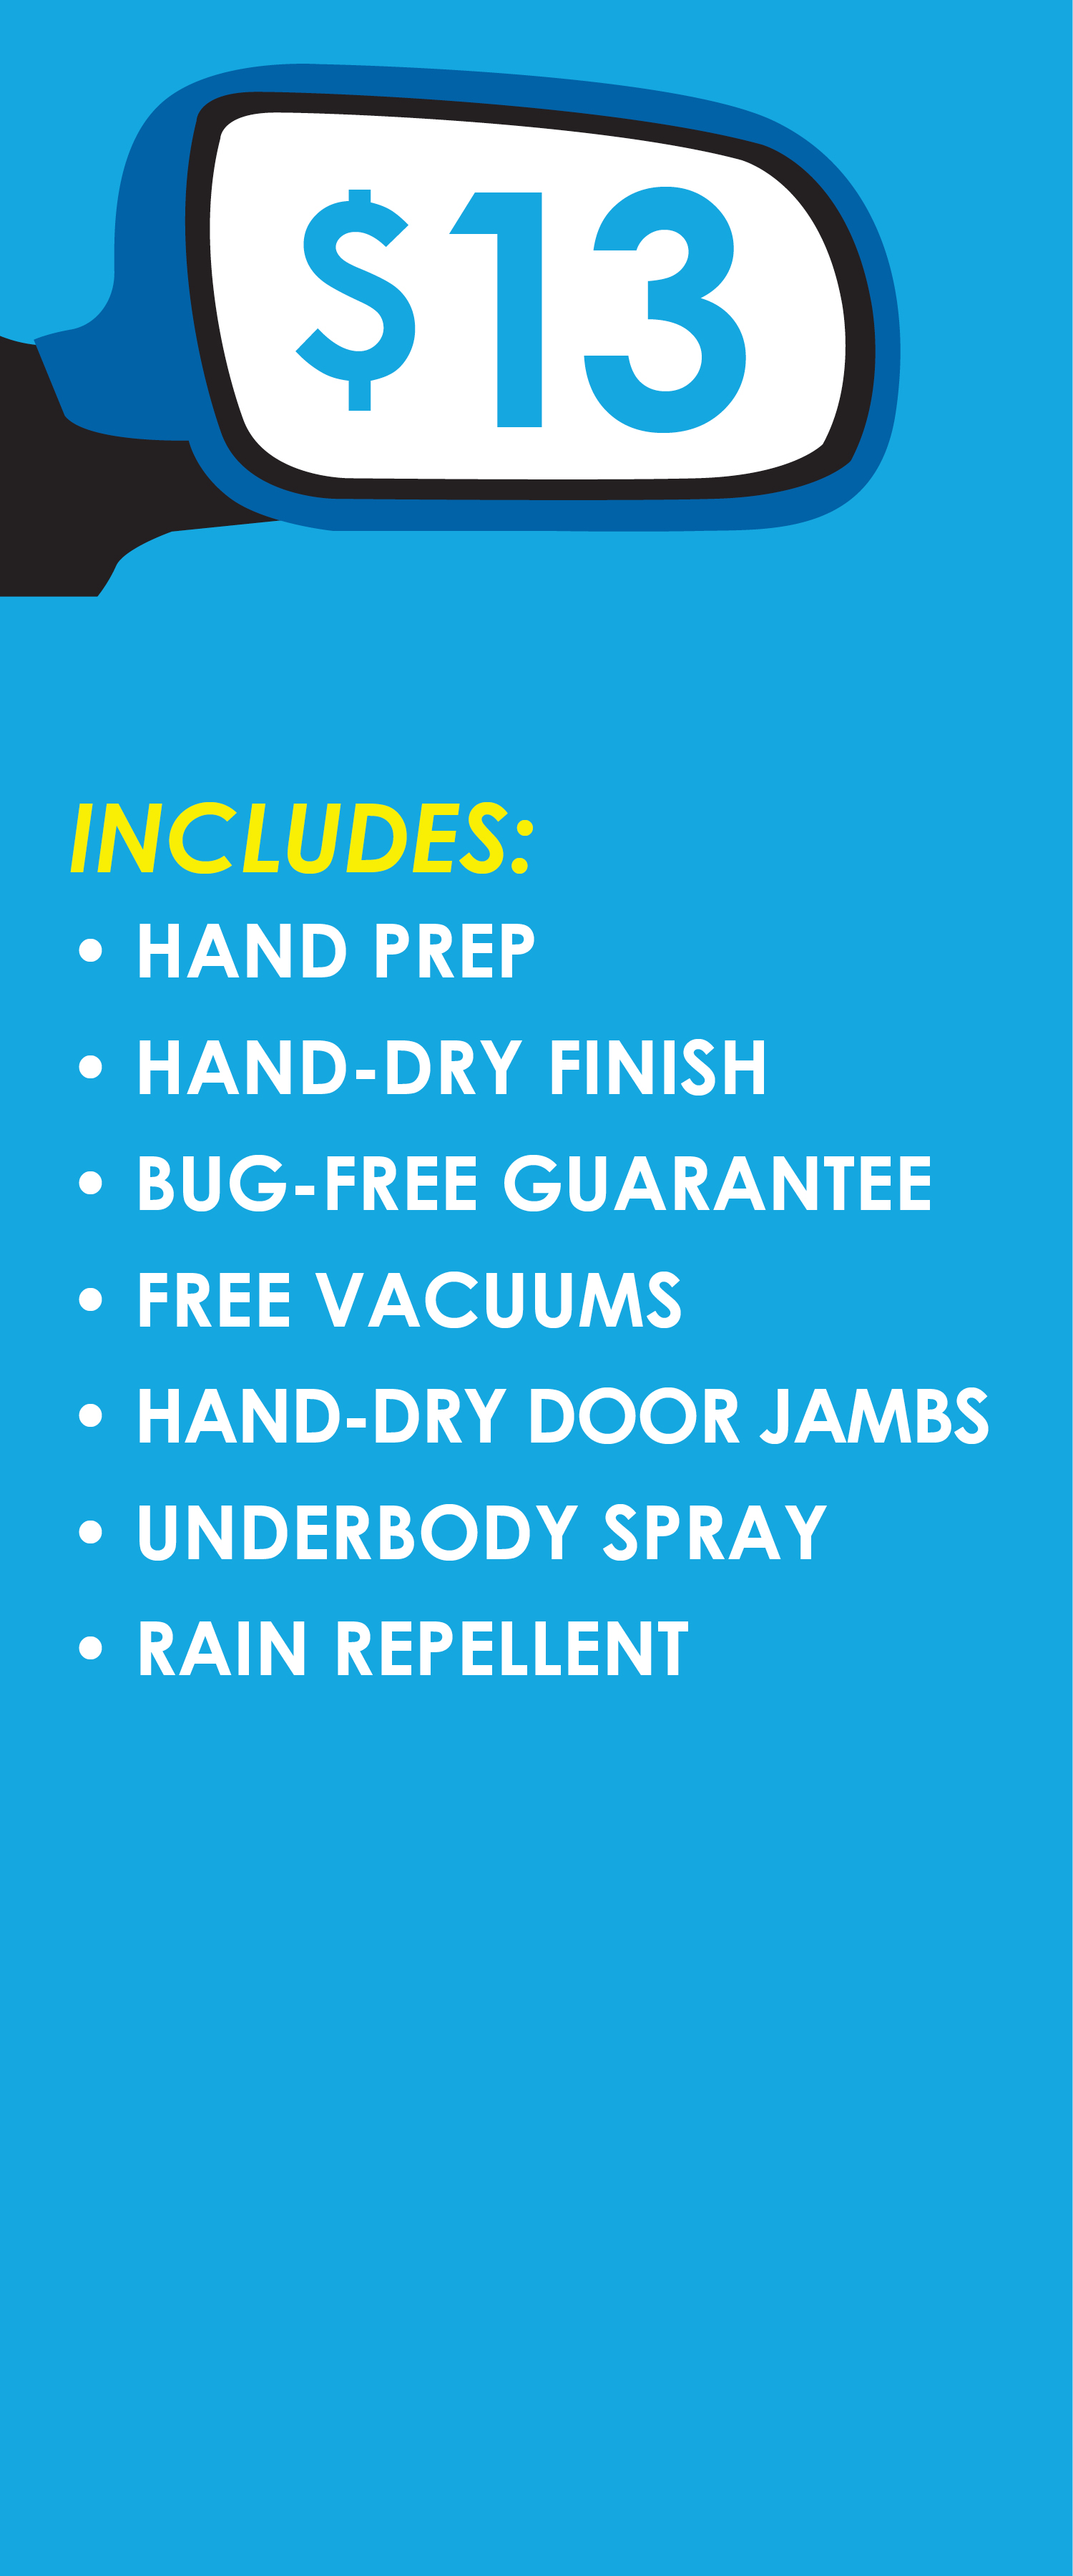 $13, Includes:Hand Prep, Hand-Dry Finish, Bug-Free Guarantee, Free Vacuums, Hand-Dry Door Jambs, Under body Spray, Rain Repellent